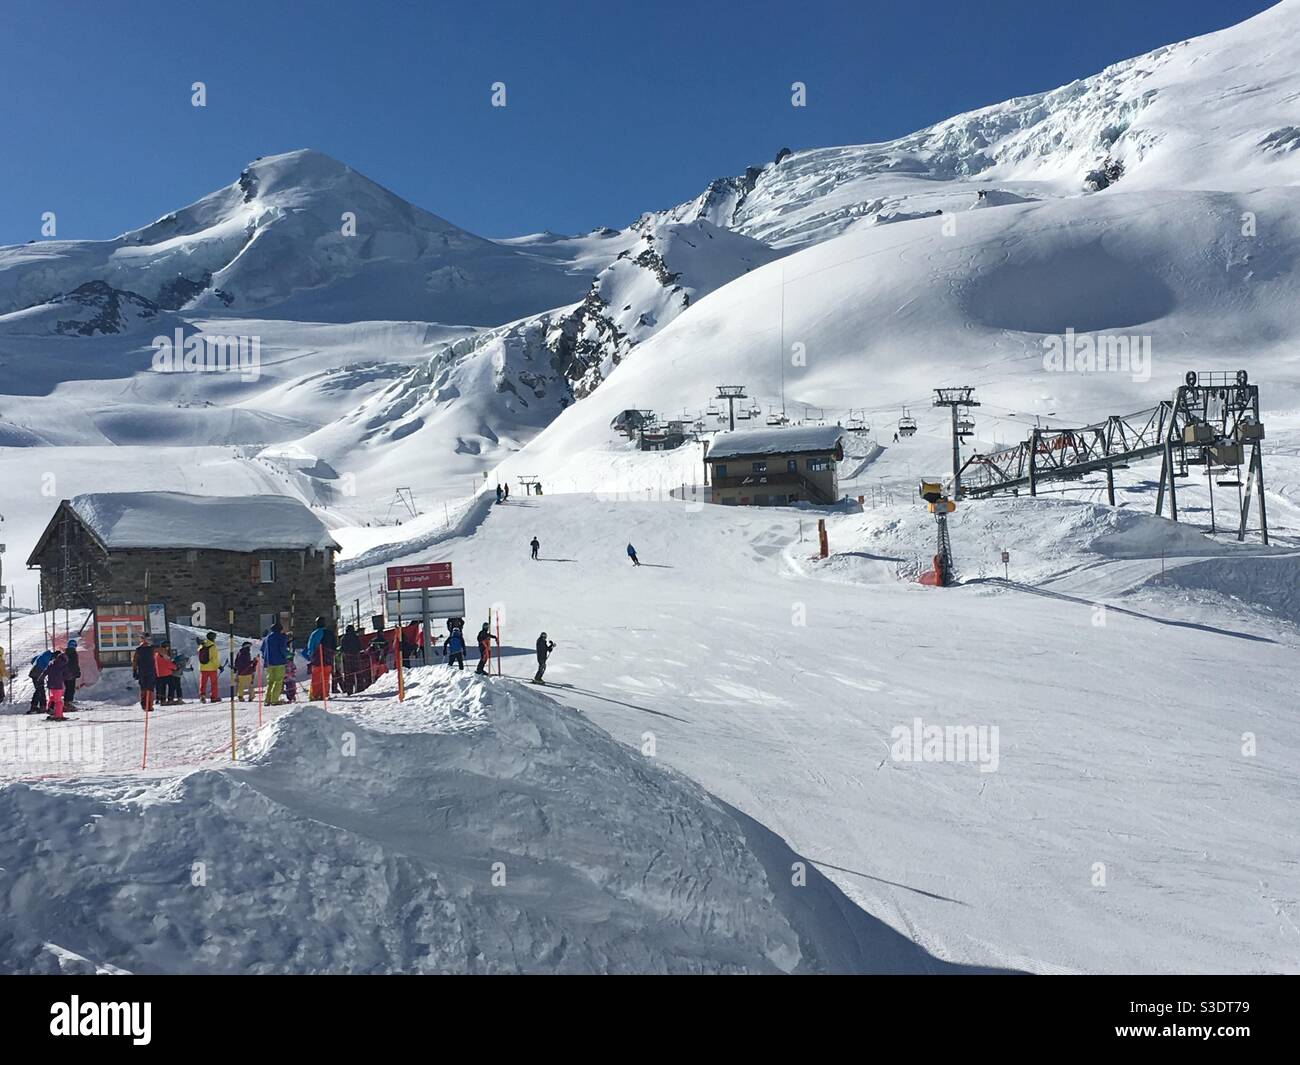 Felskinn Ski slopes wth Mt. Allalin, Saas Fee, Valais, Switzerland. Stock Photo